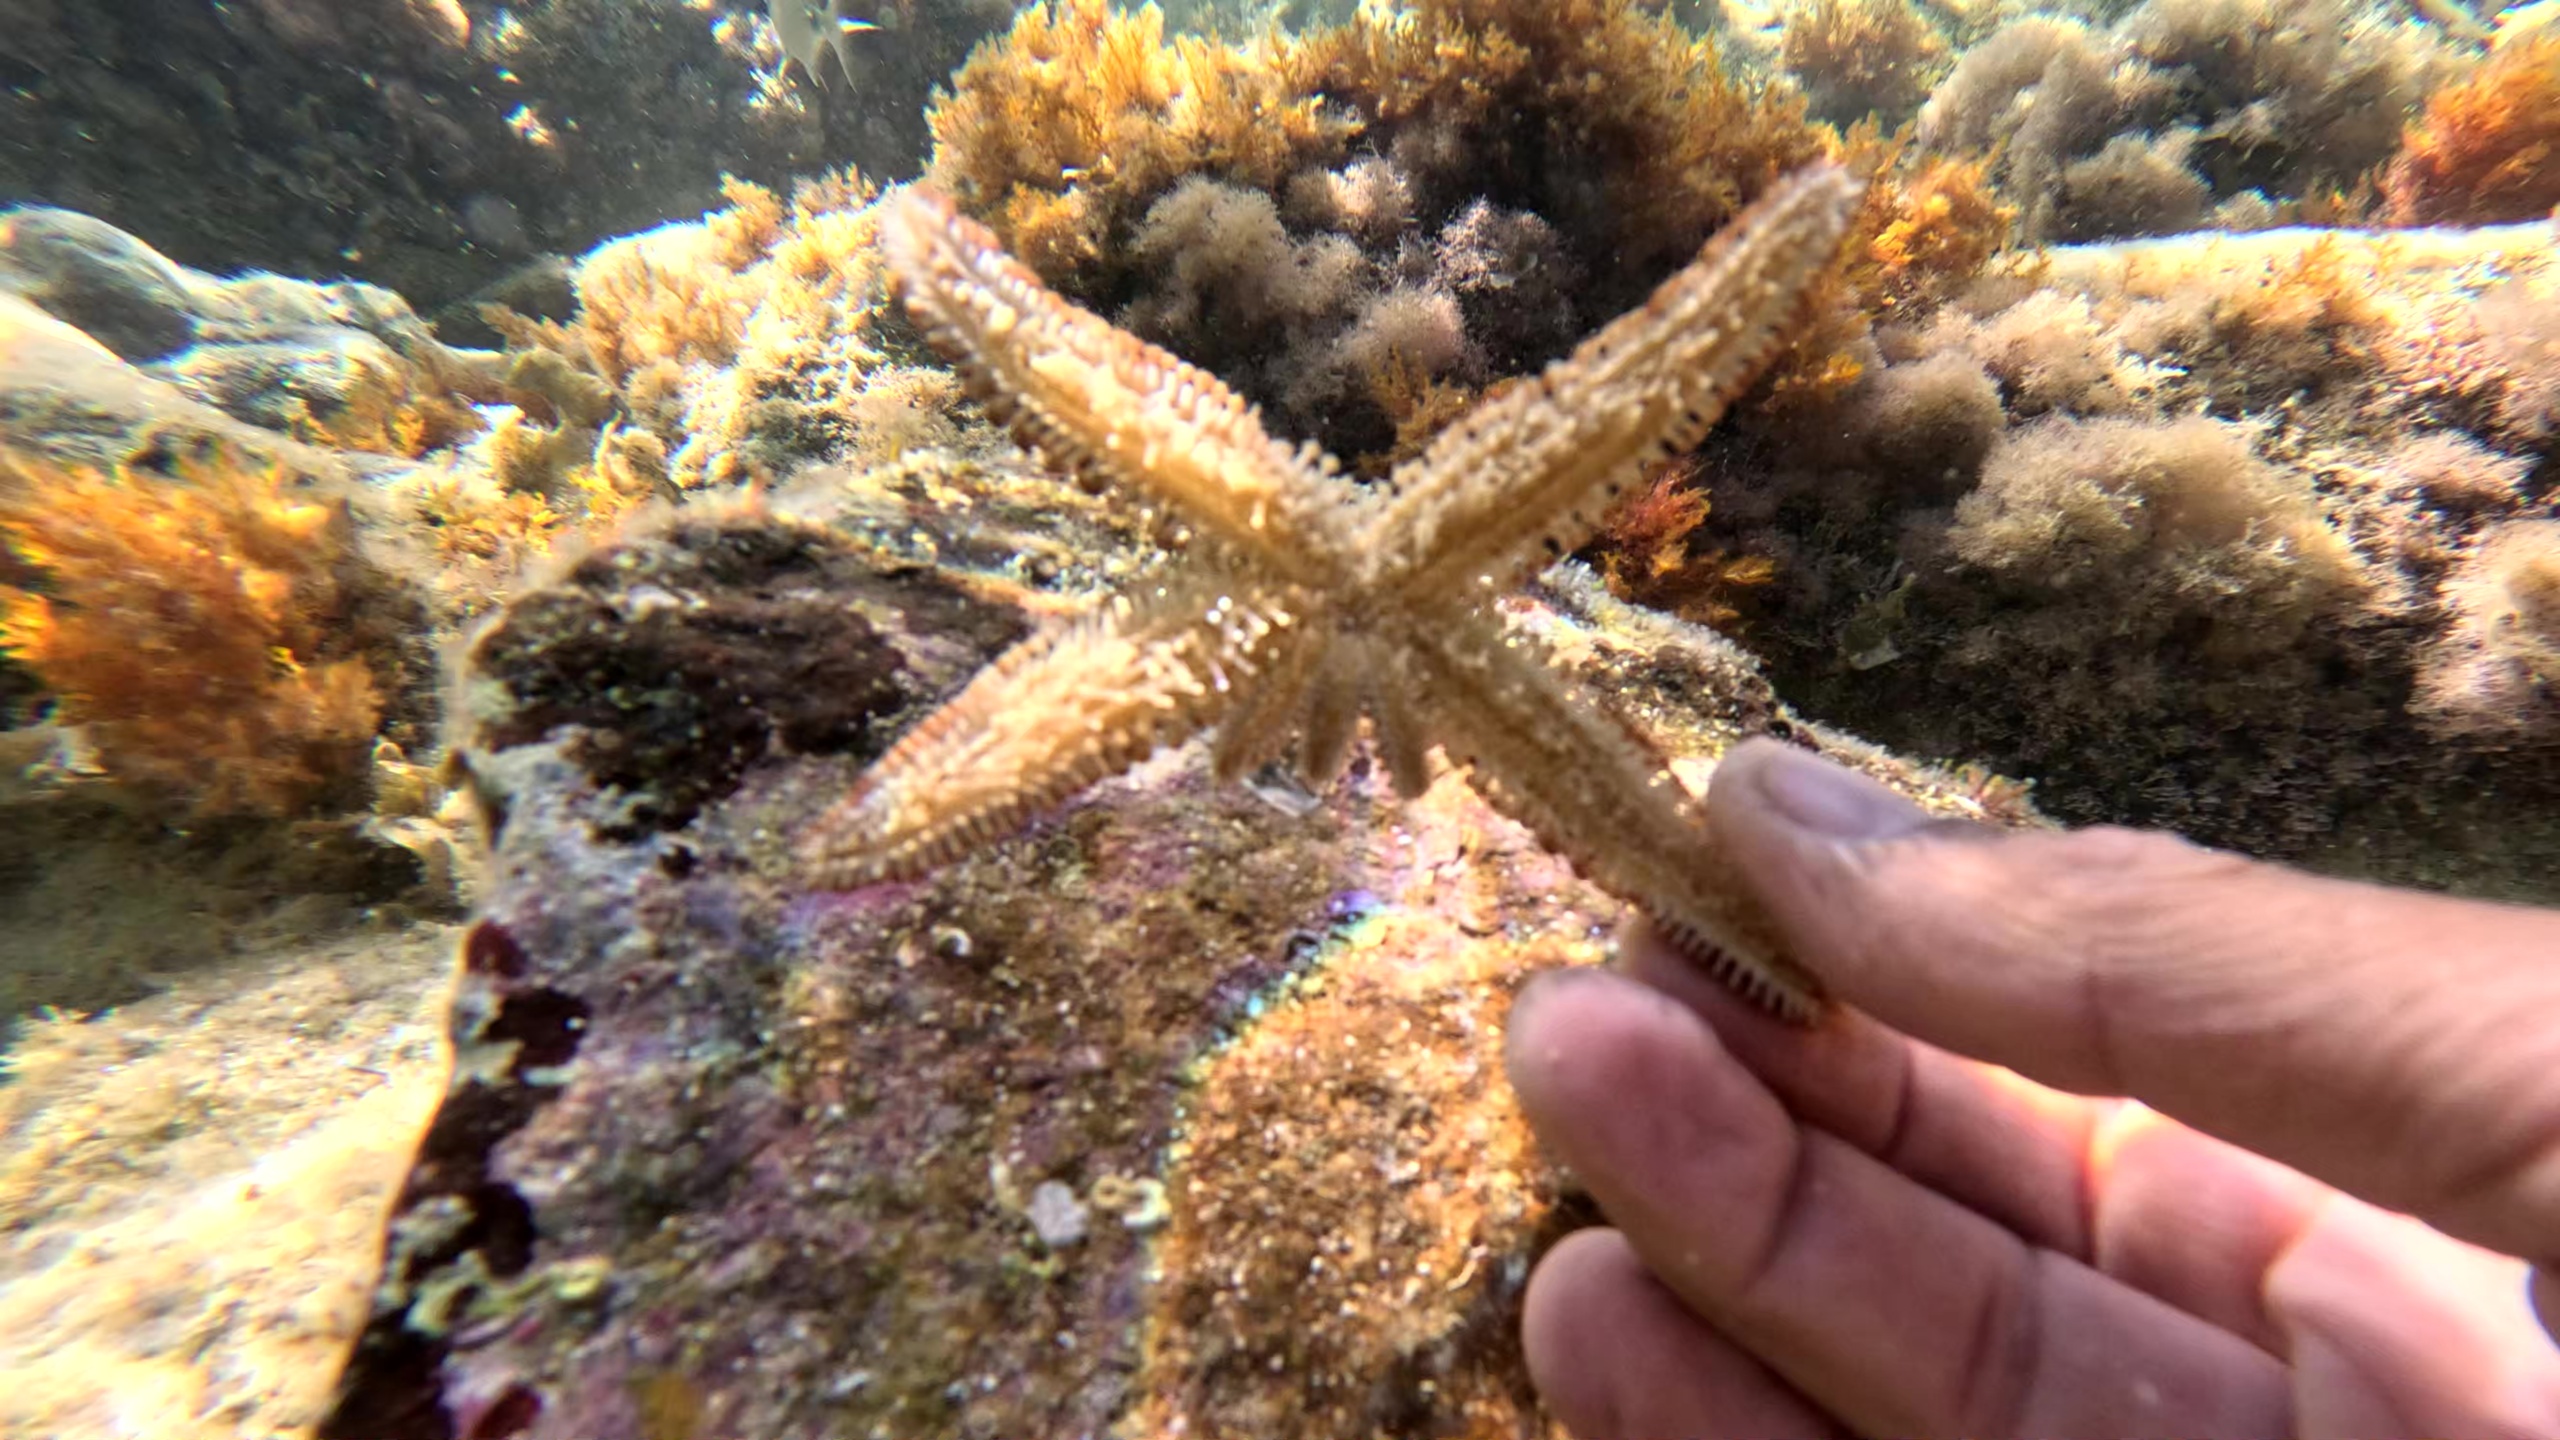 Variable spiny starfish - Coscinasterias tenuispina - Stella marina spinosa variabile - www.intotheblue.it